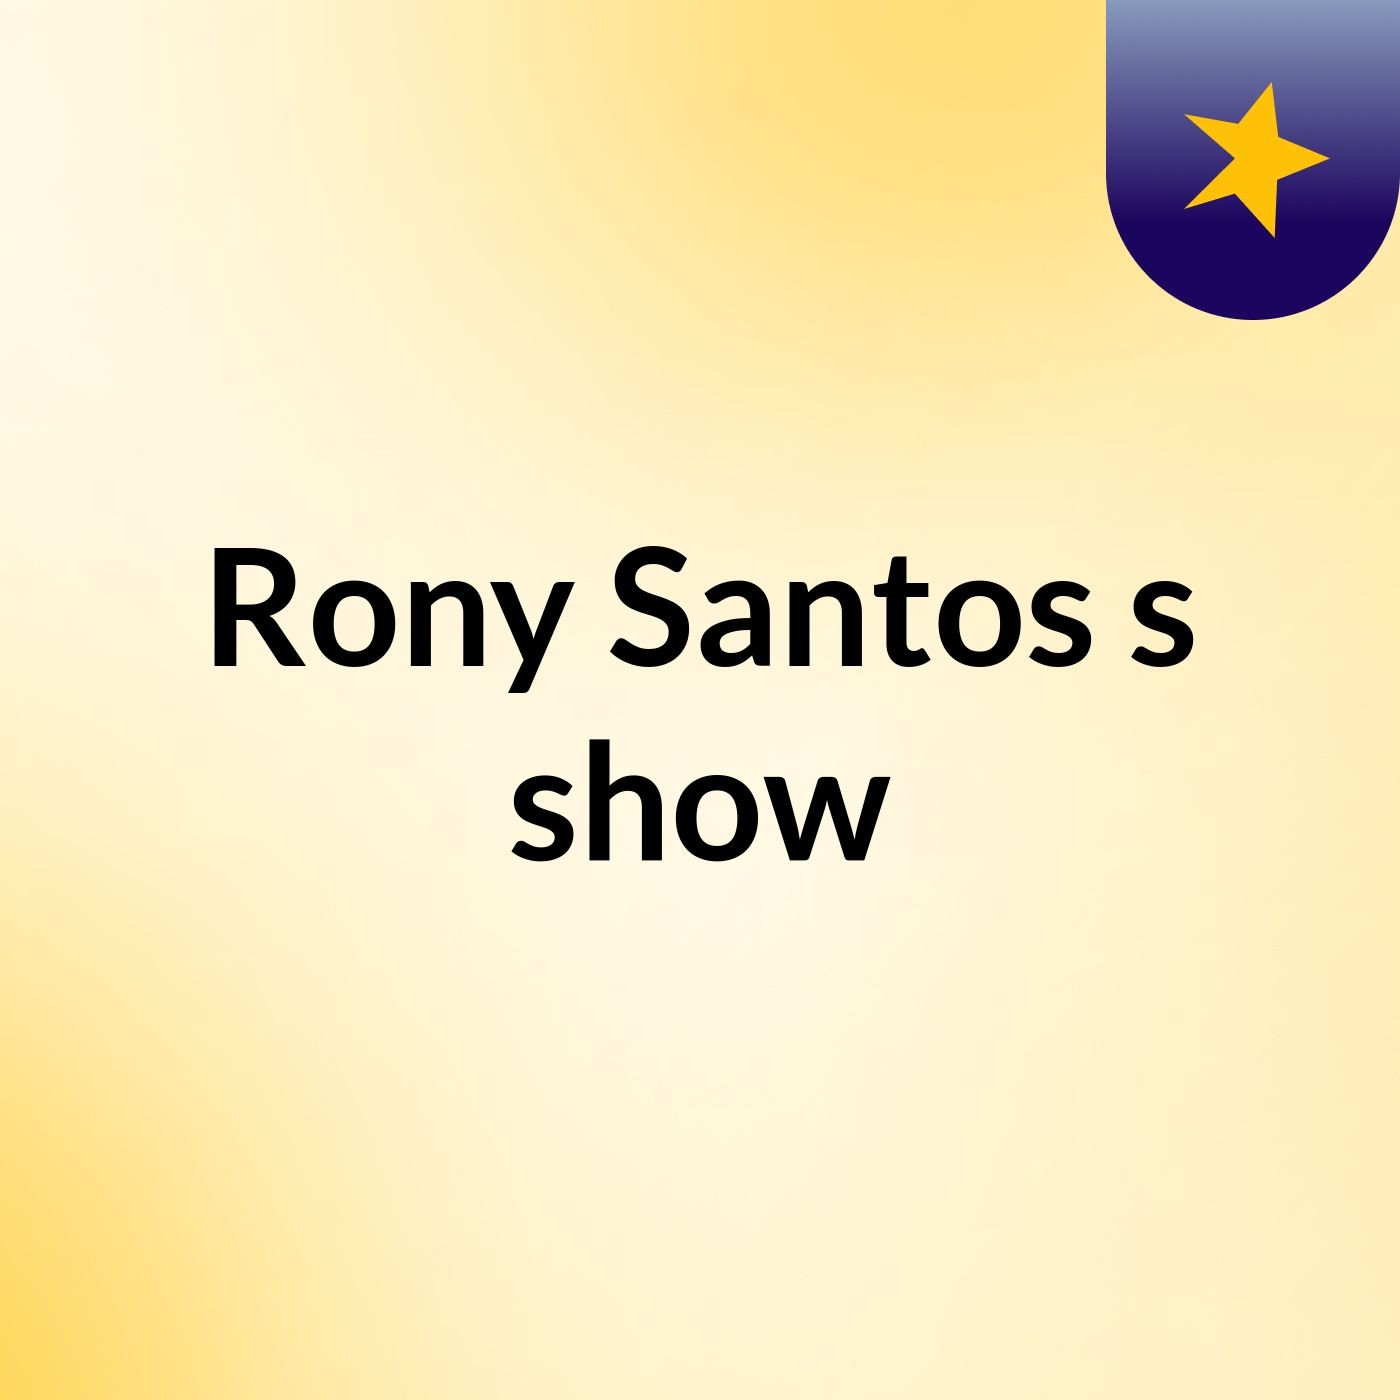 Rony Santos's show